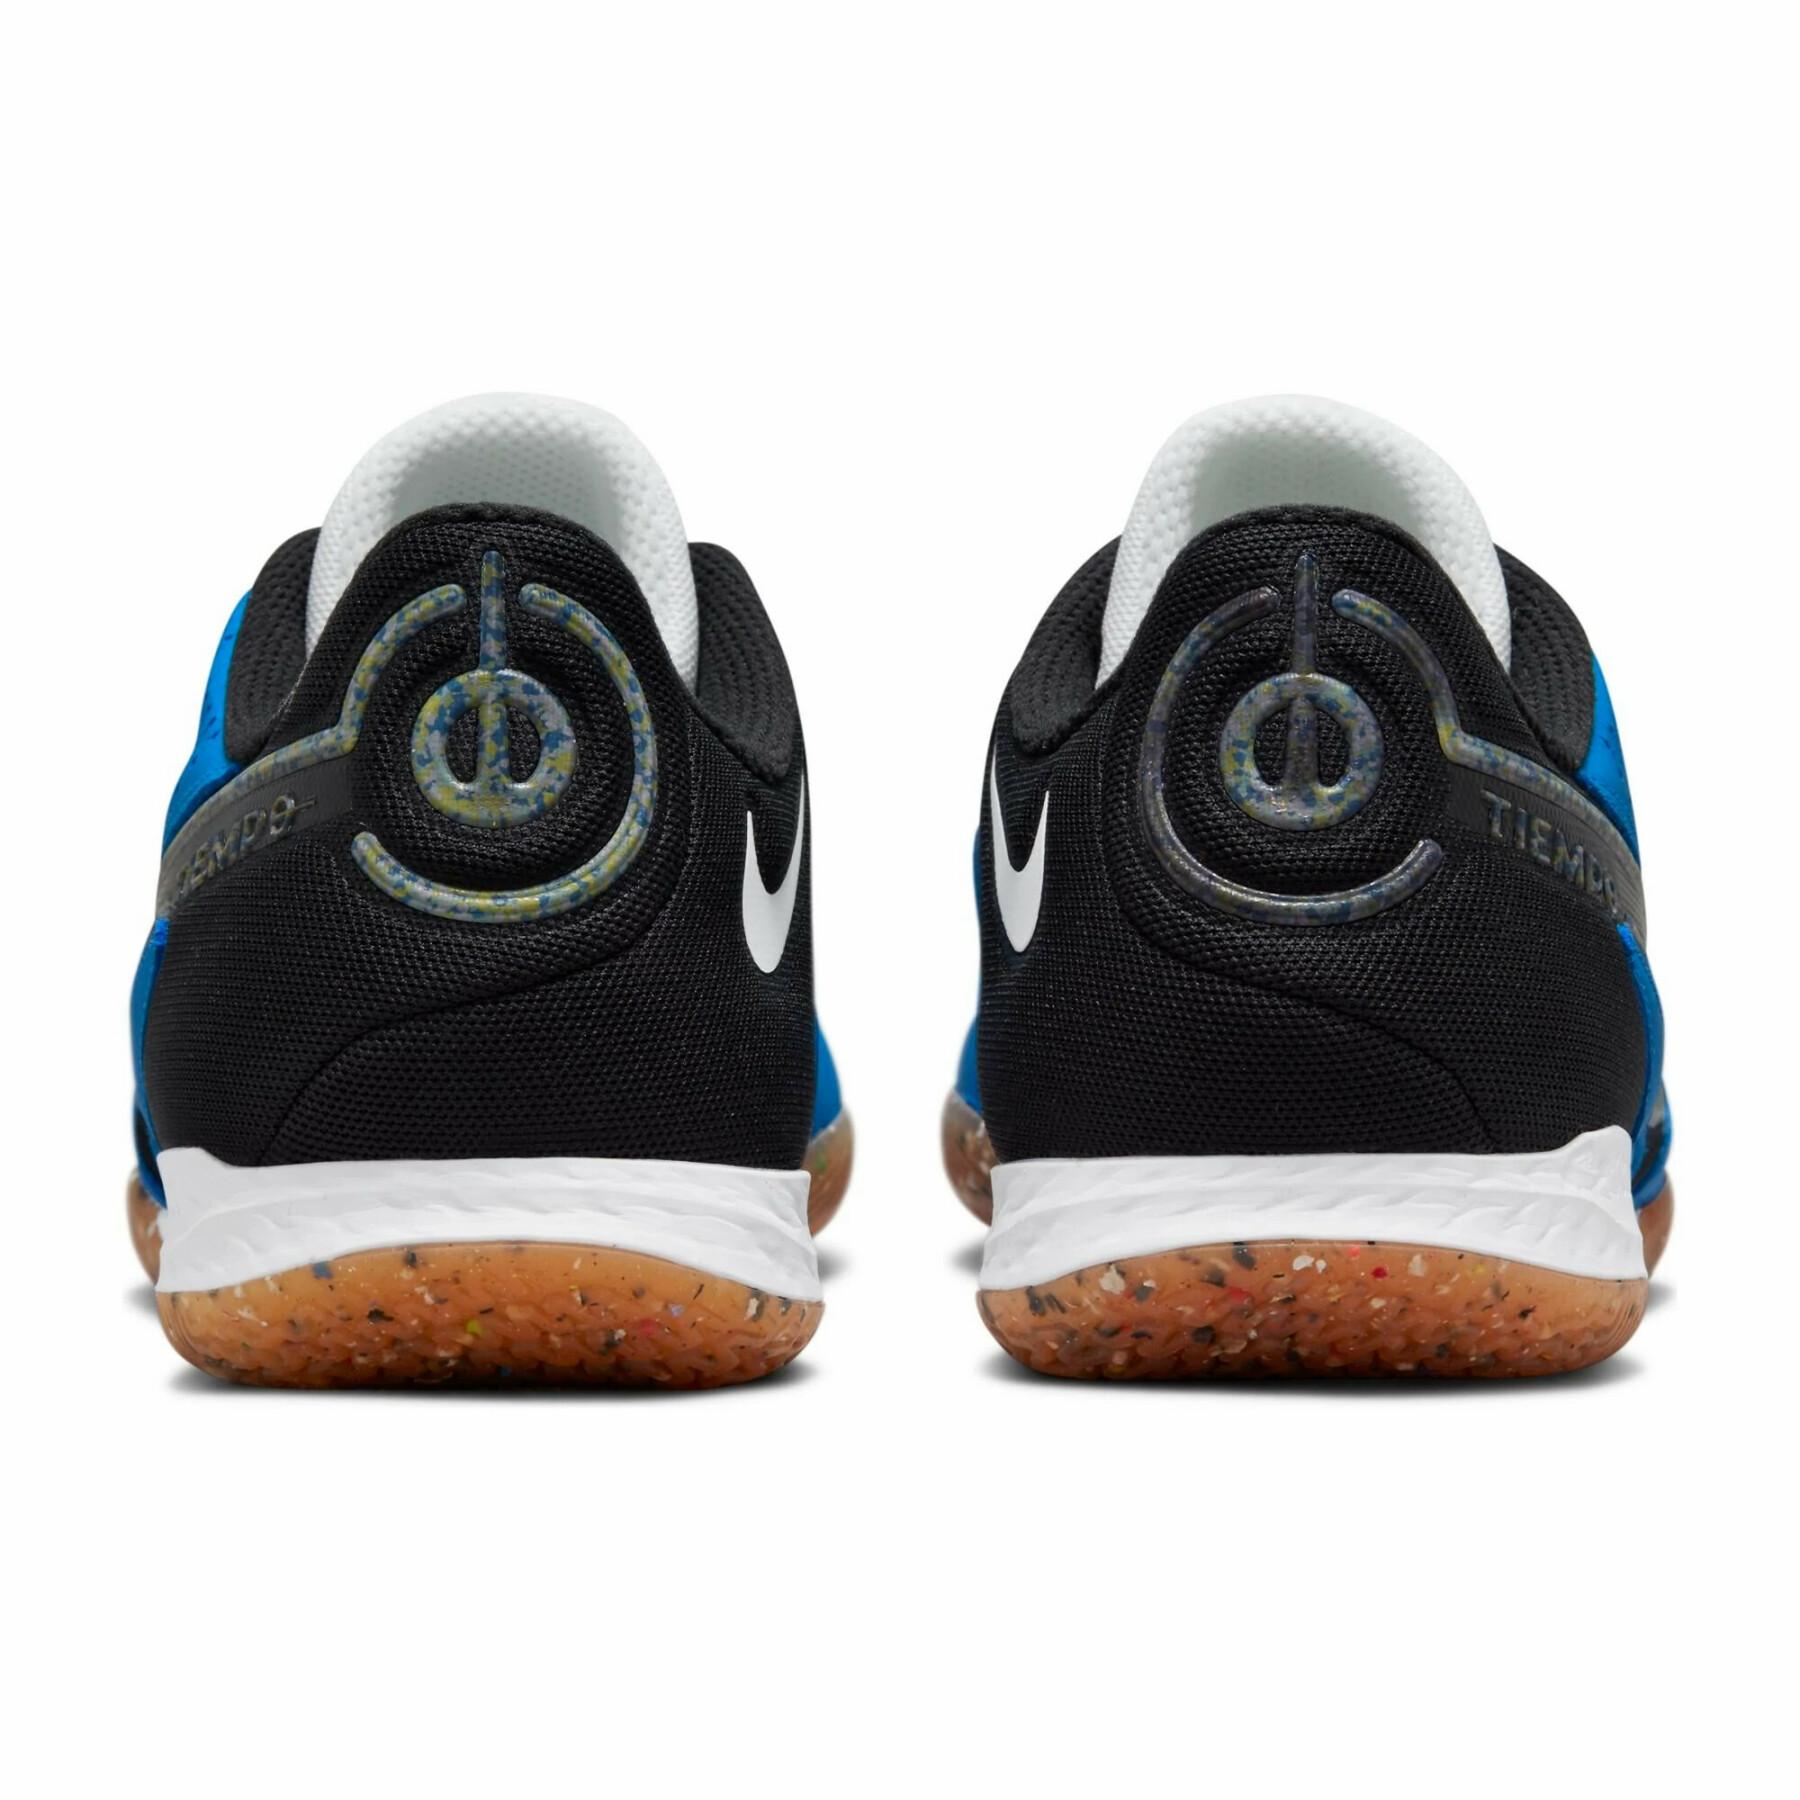 Zapatos Nike react tiempo legend 9 pro ic